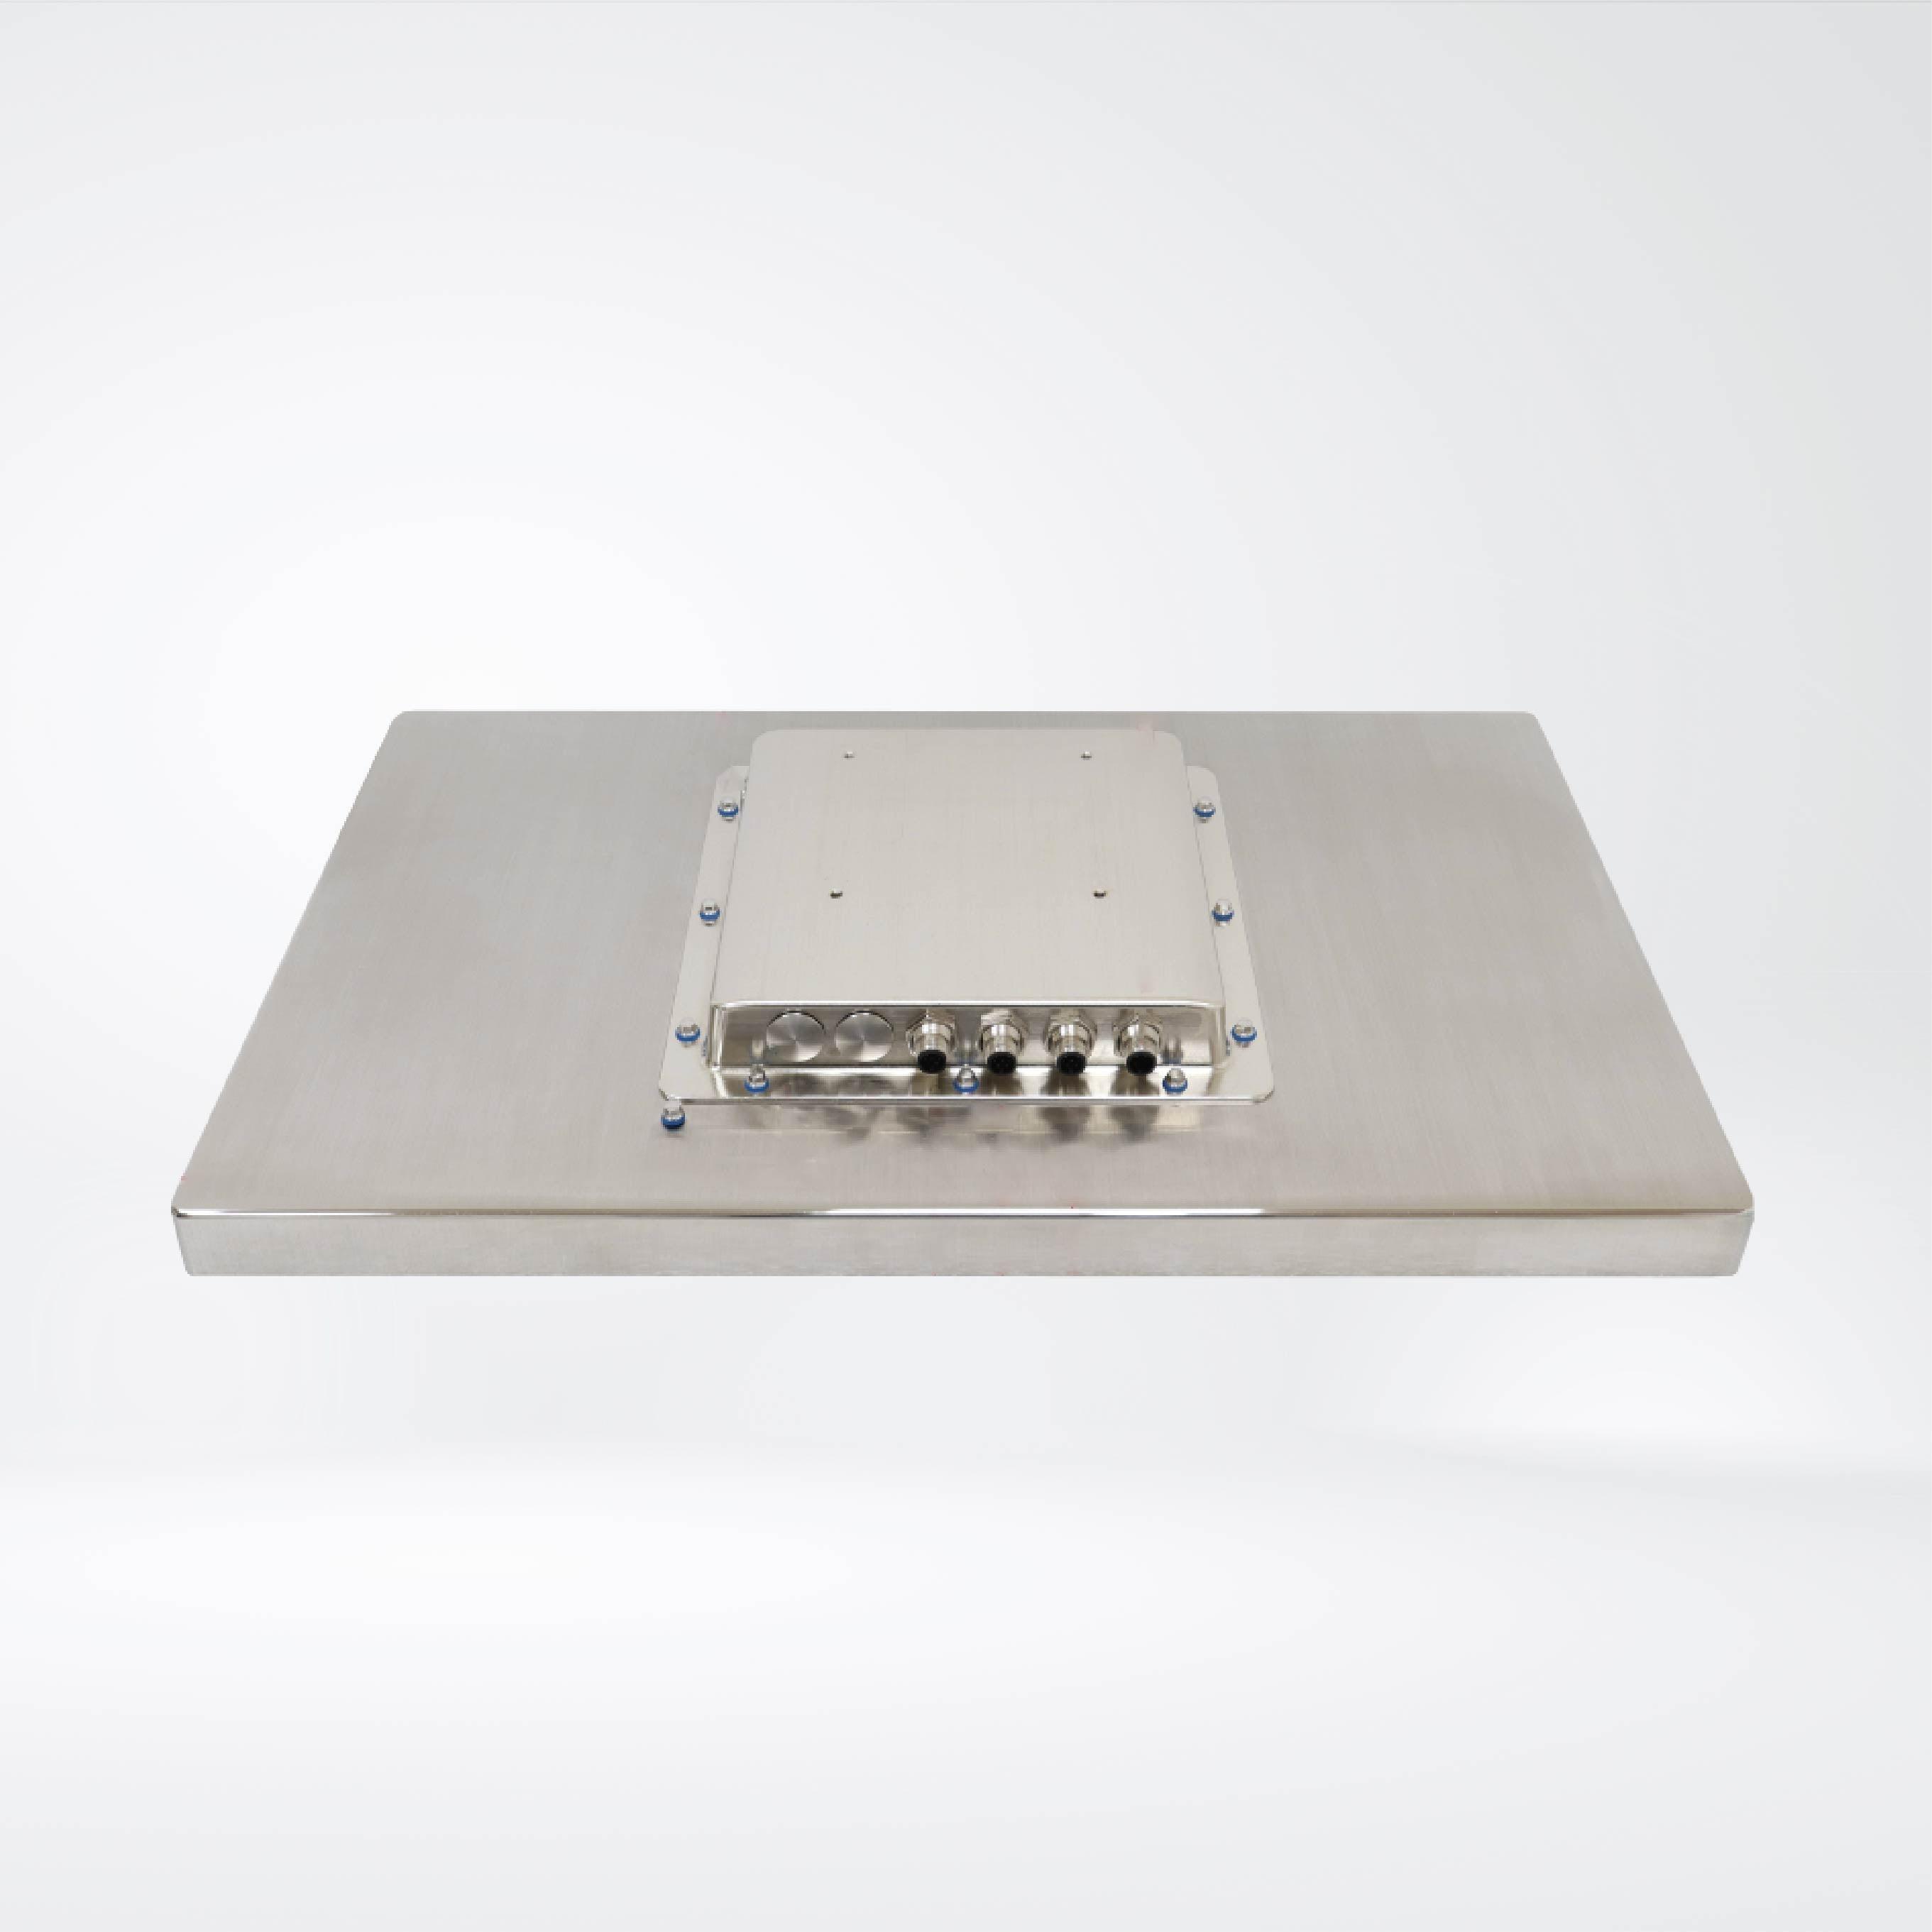 PhanTAM-821BP IP66/ IP69K Food-grade Stainless Steel Panel PC with Intel Celeron J6412 Processor - Riverplus